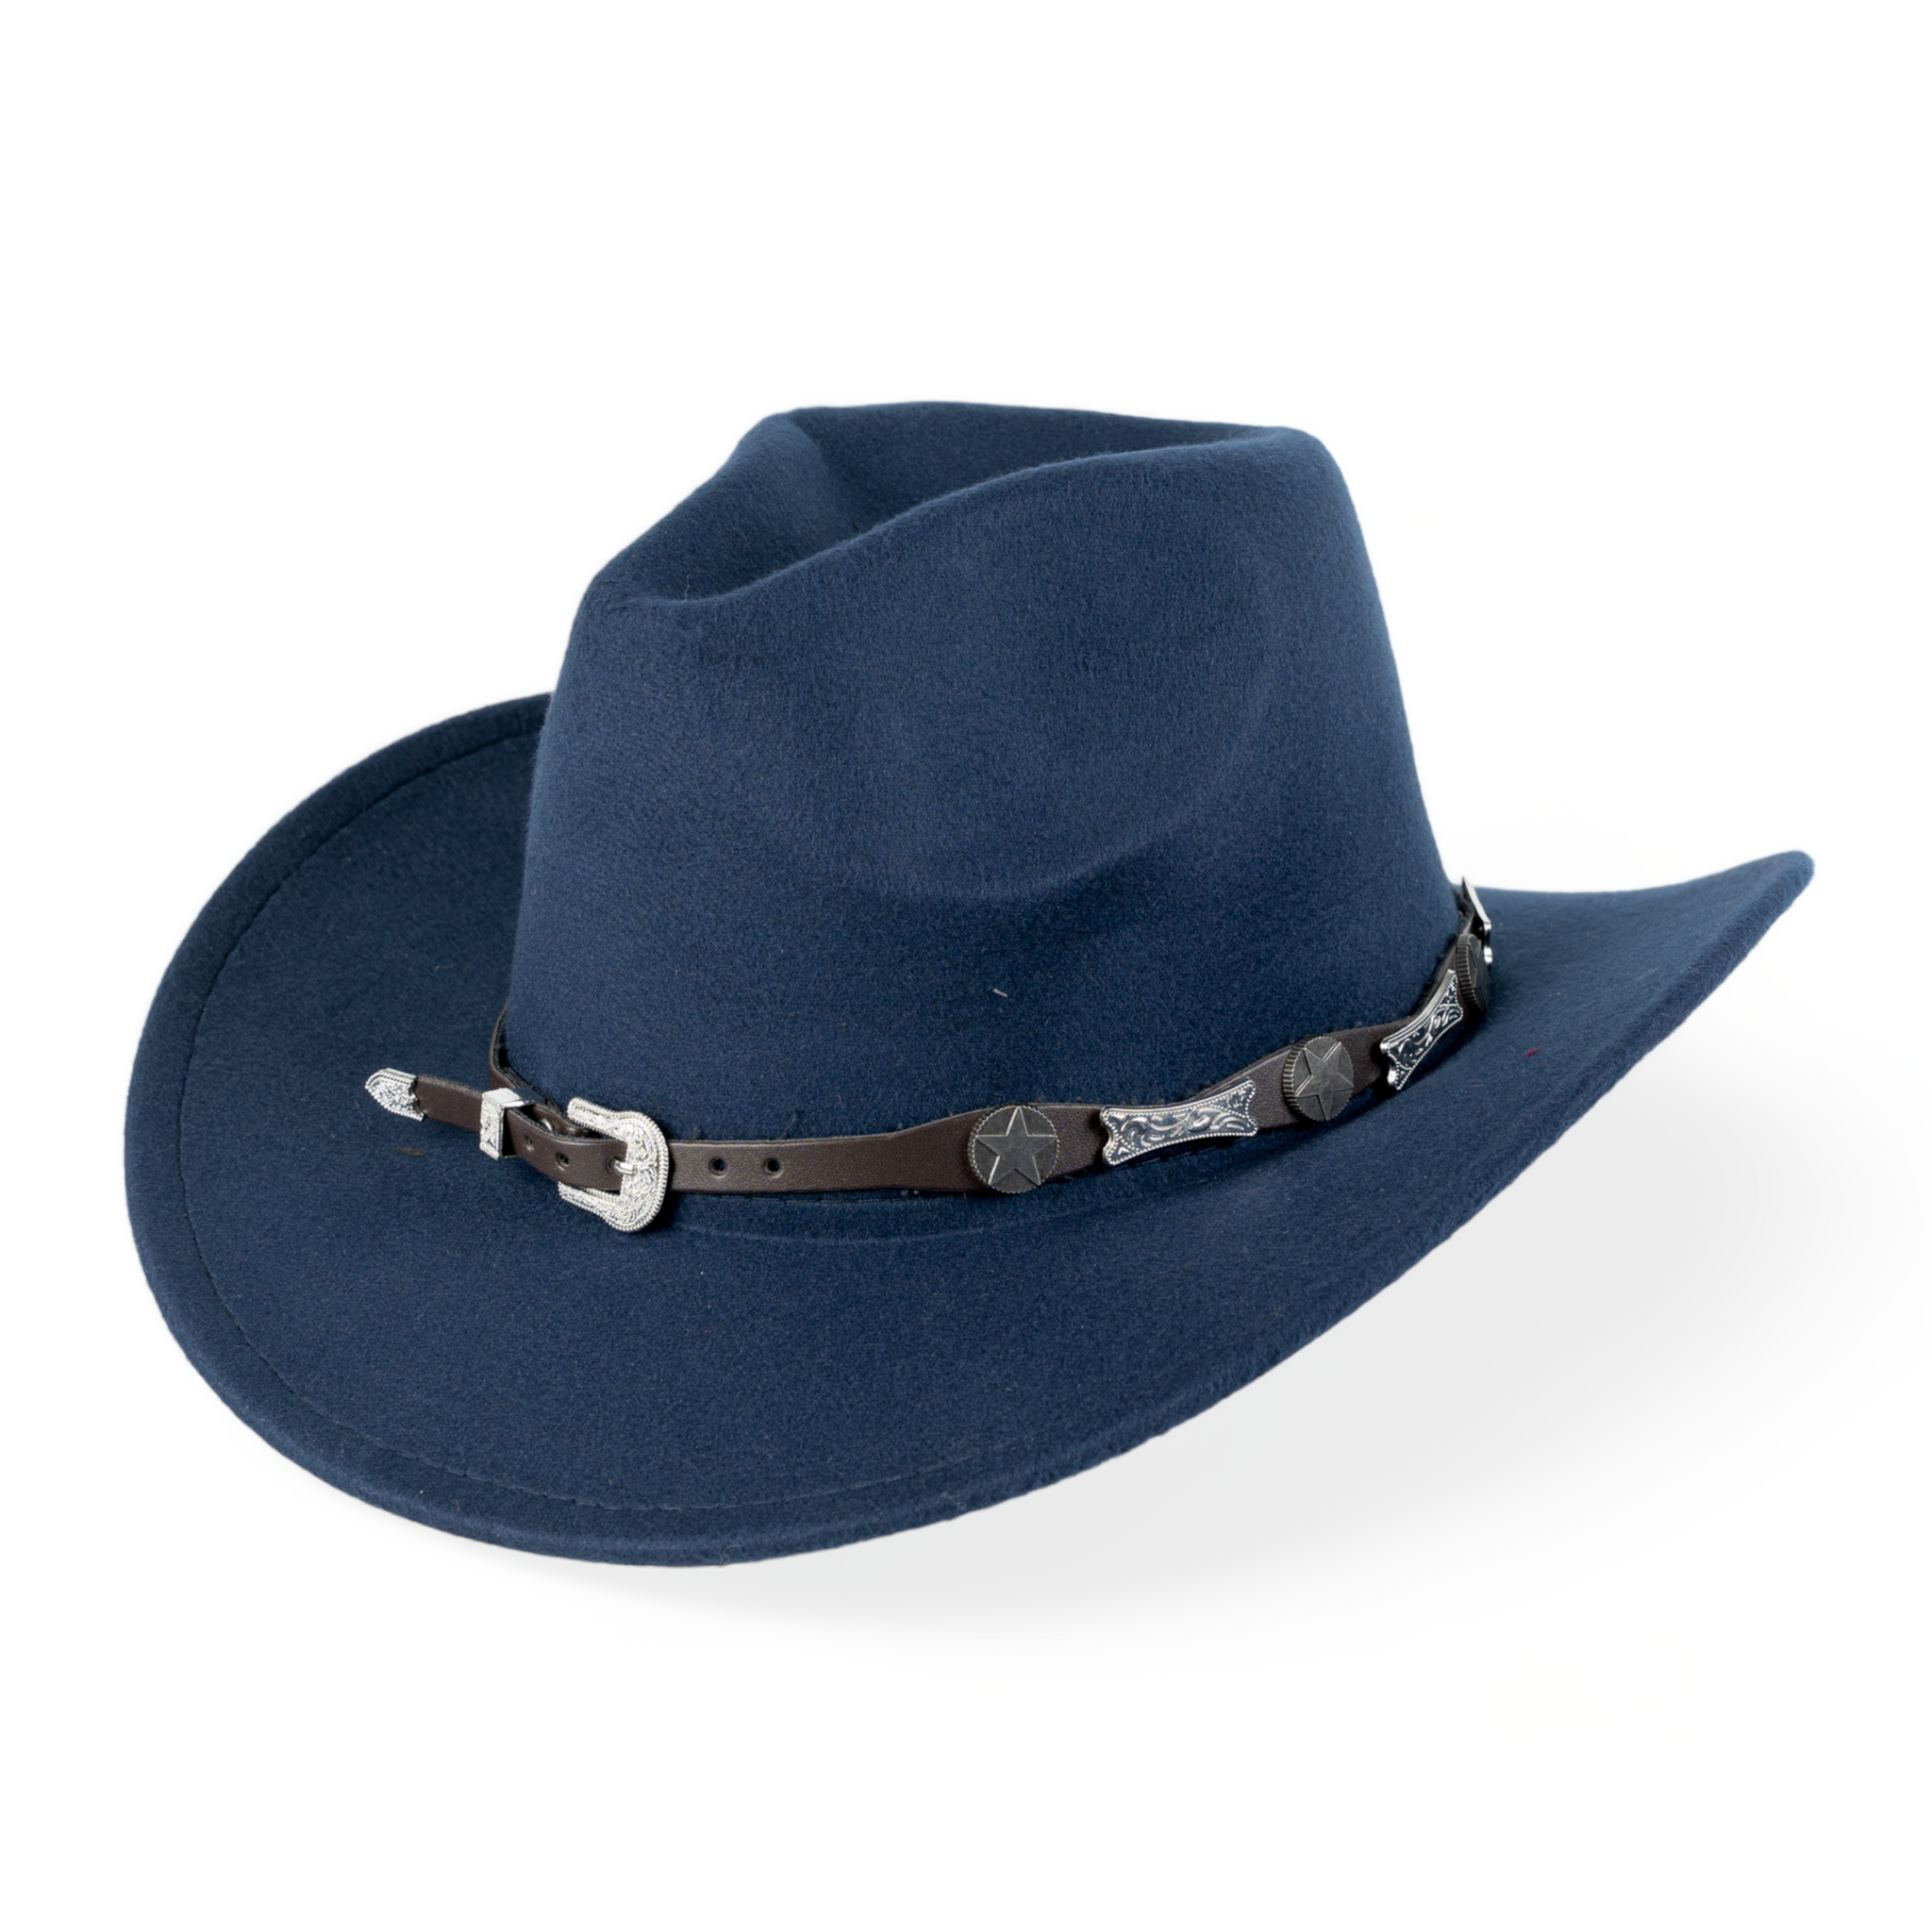 Chokore Cowboy Hat with Buckle Belt (Navy Blue)